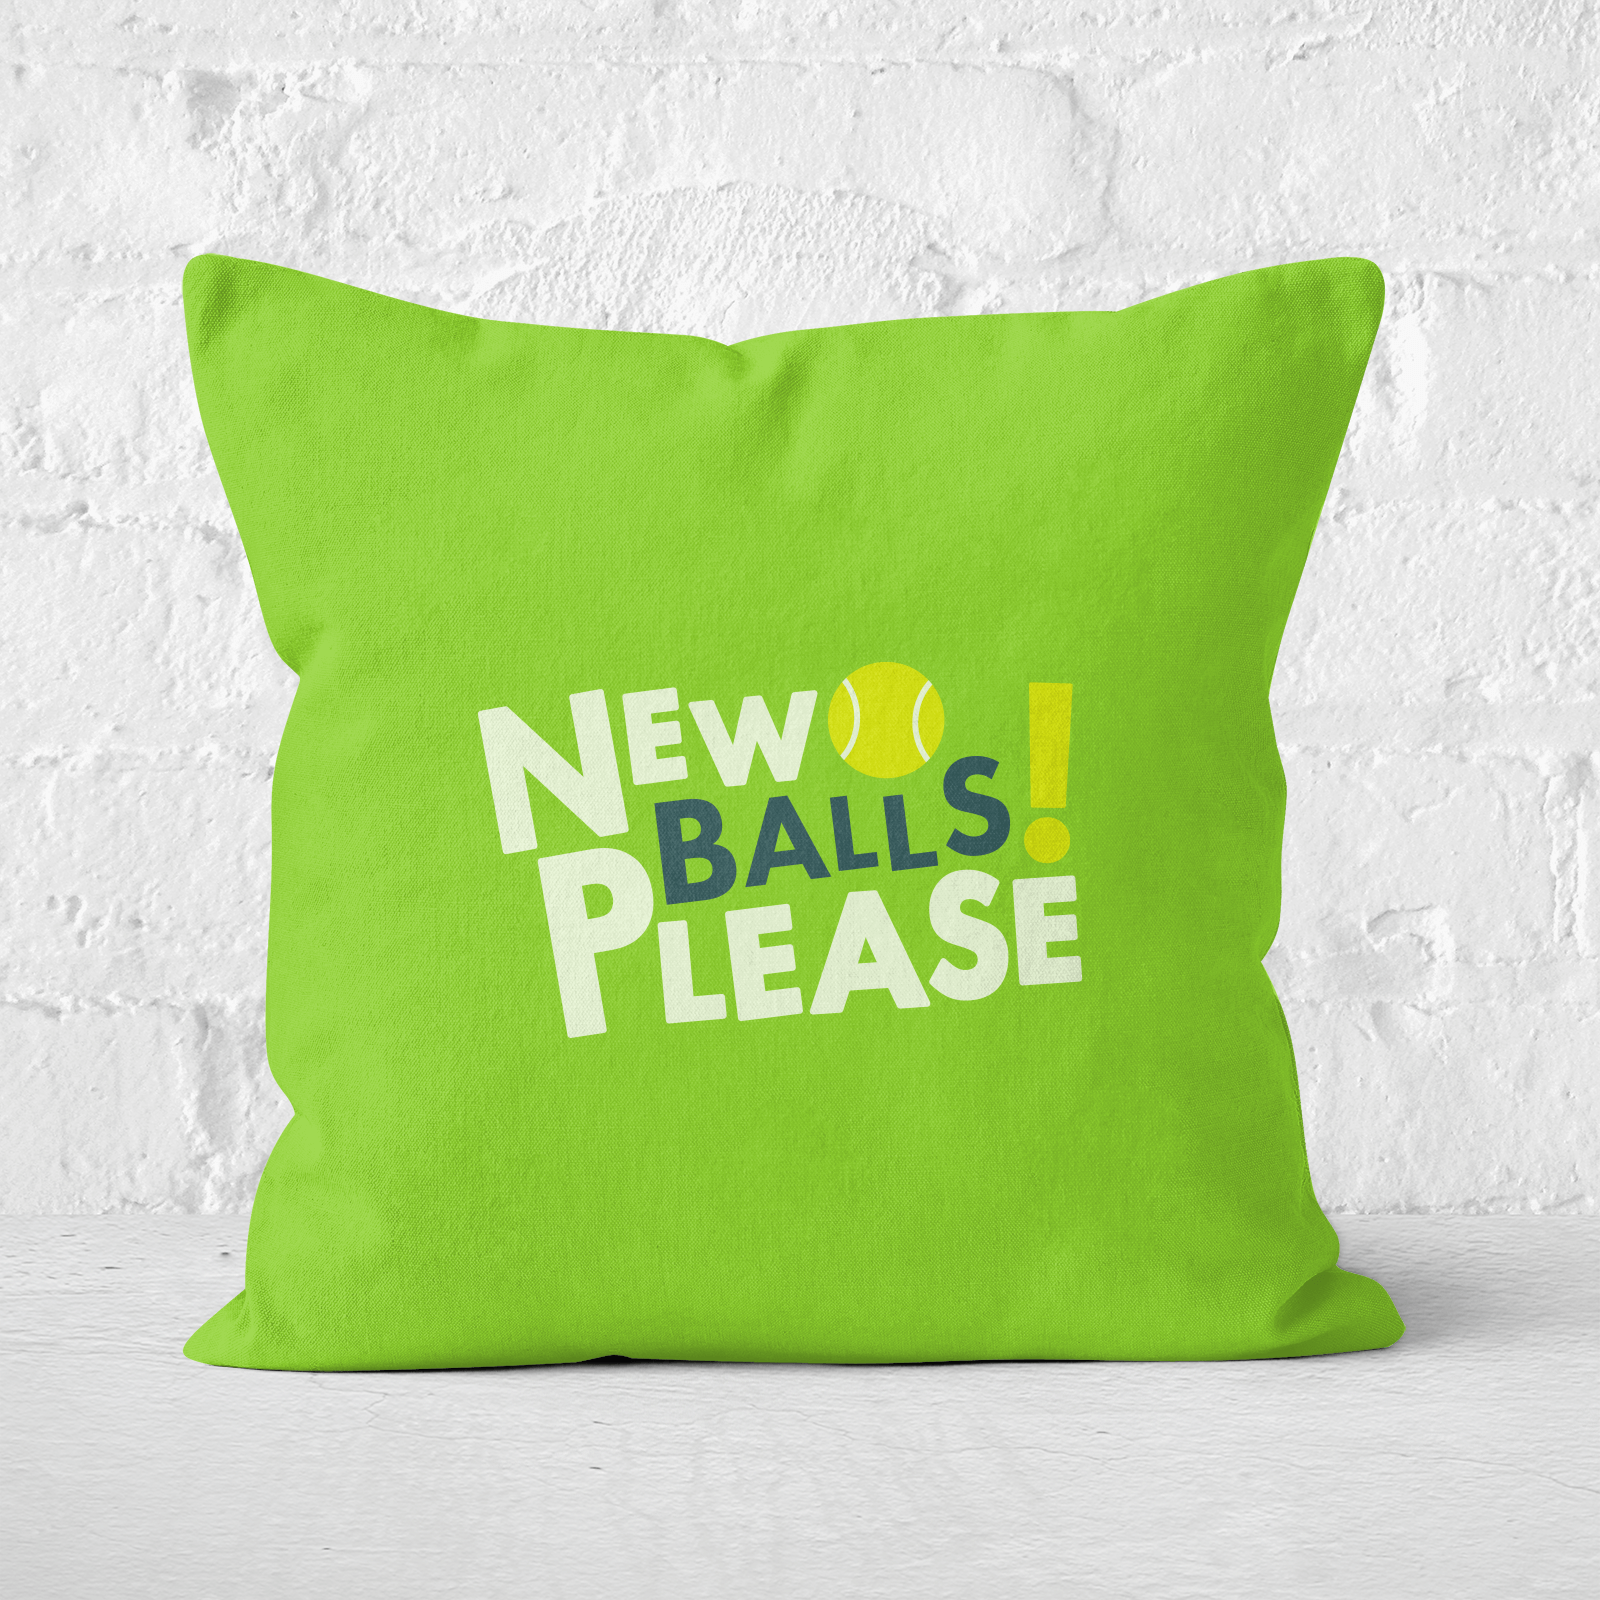 New Balls Please Square Cushion   60x60cm   Soft Touch